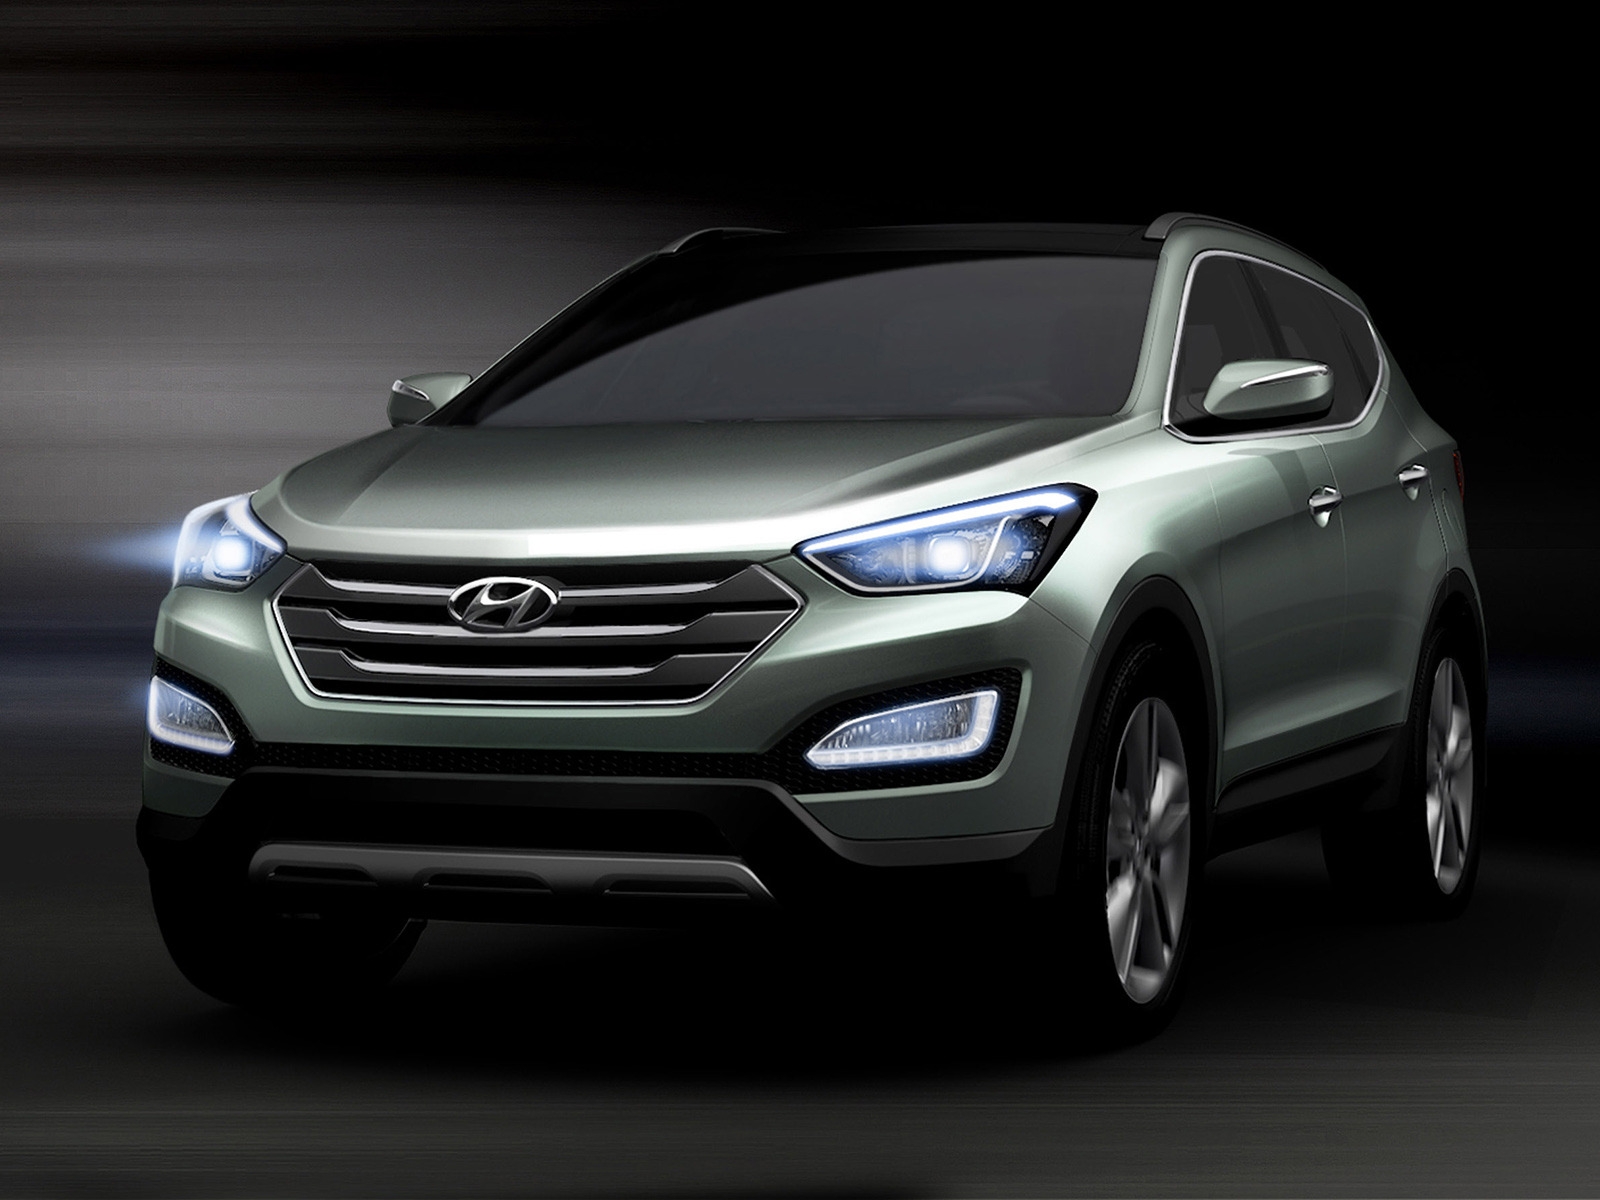 Hyundai Santa FE 2013 Edition for 1600 x 1200 resolution